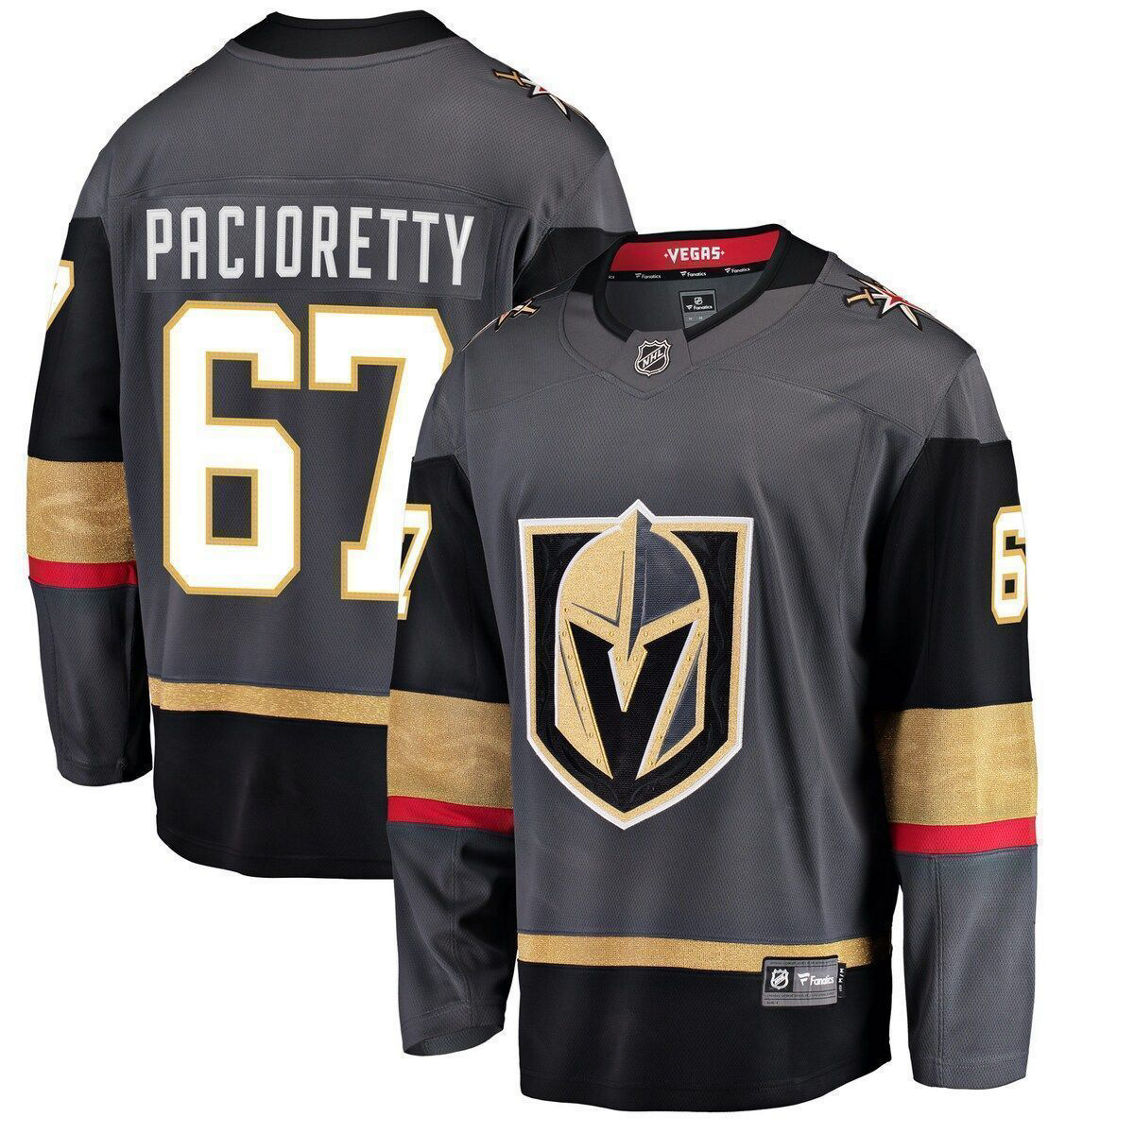 The Vegas Golden Knights alternate uniform